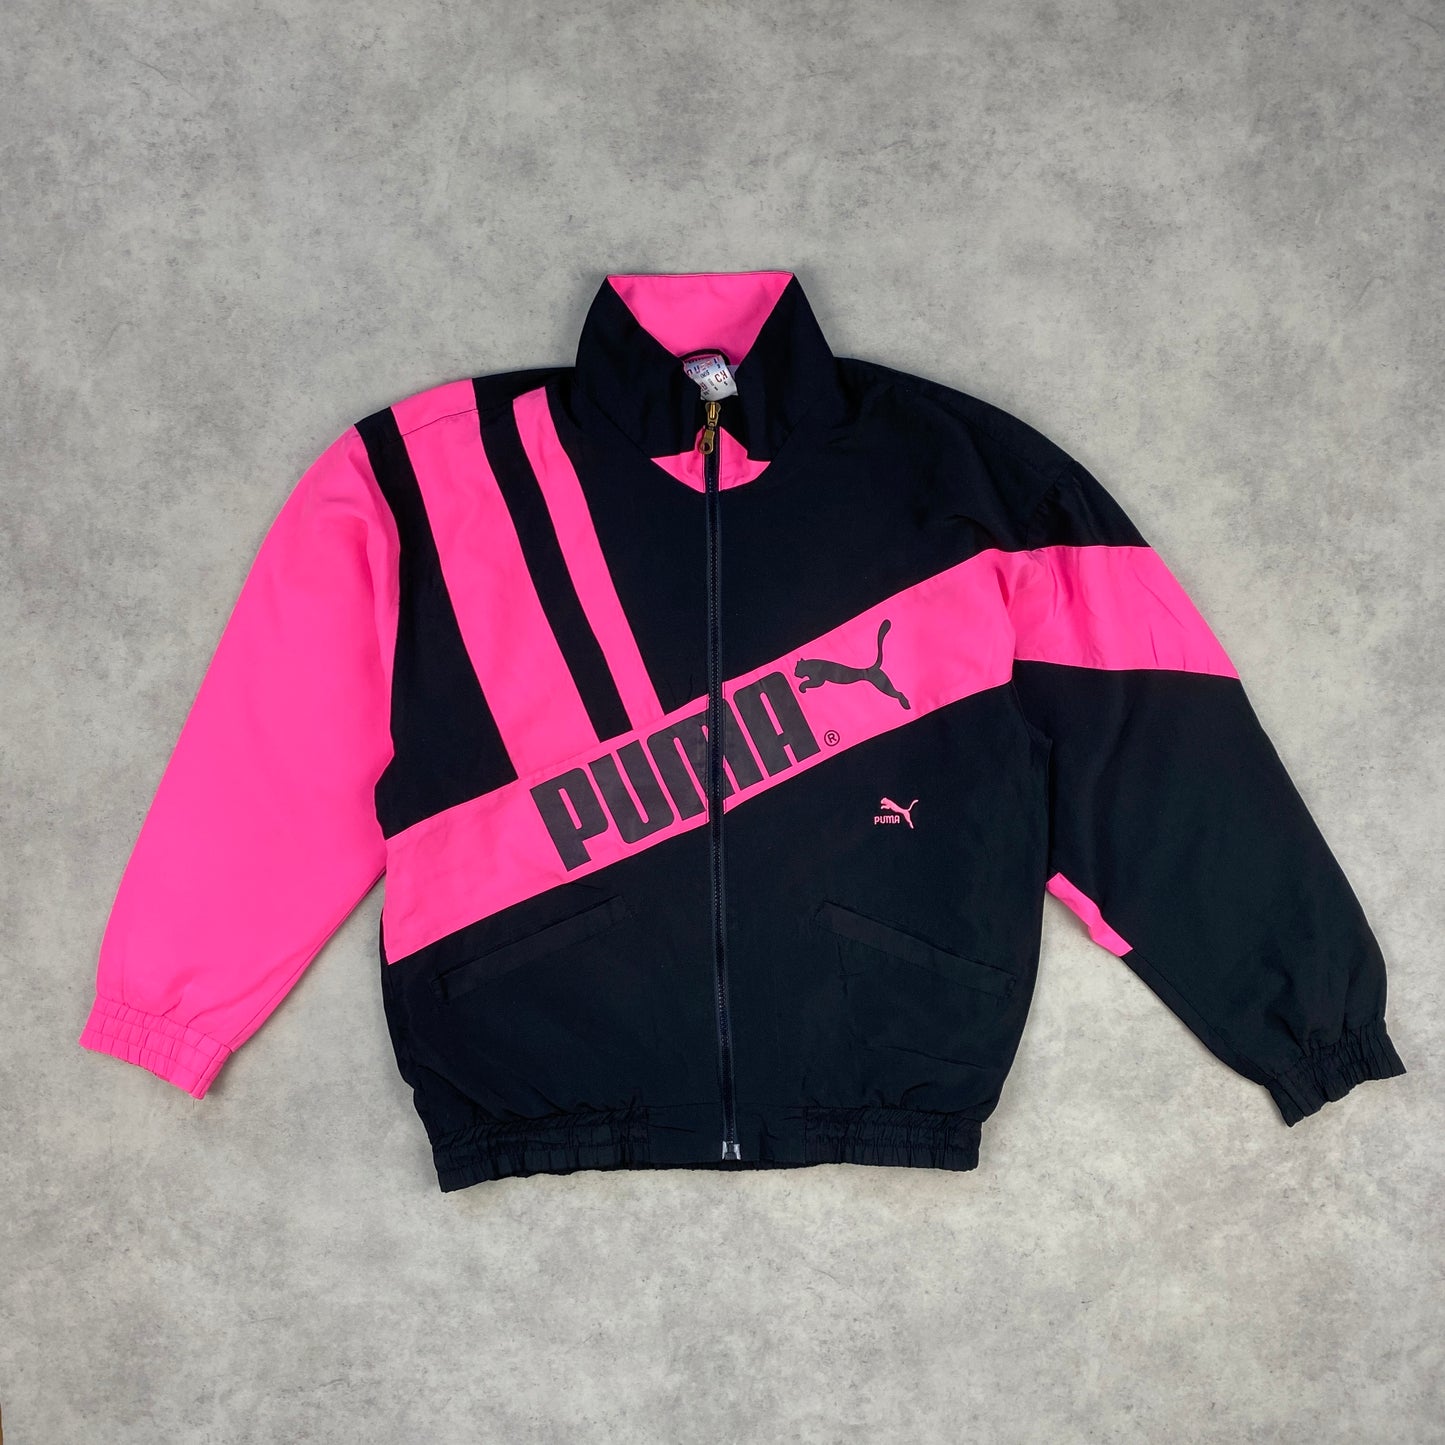 Puma track jacket (S)